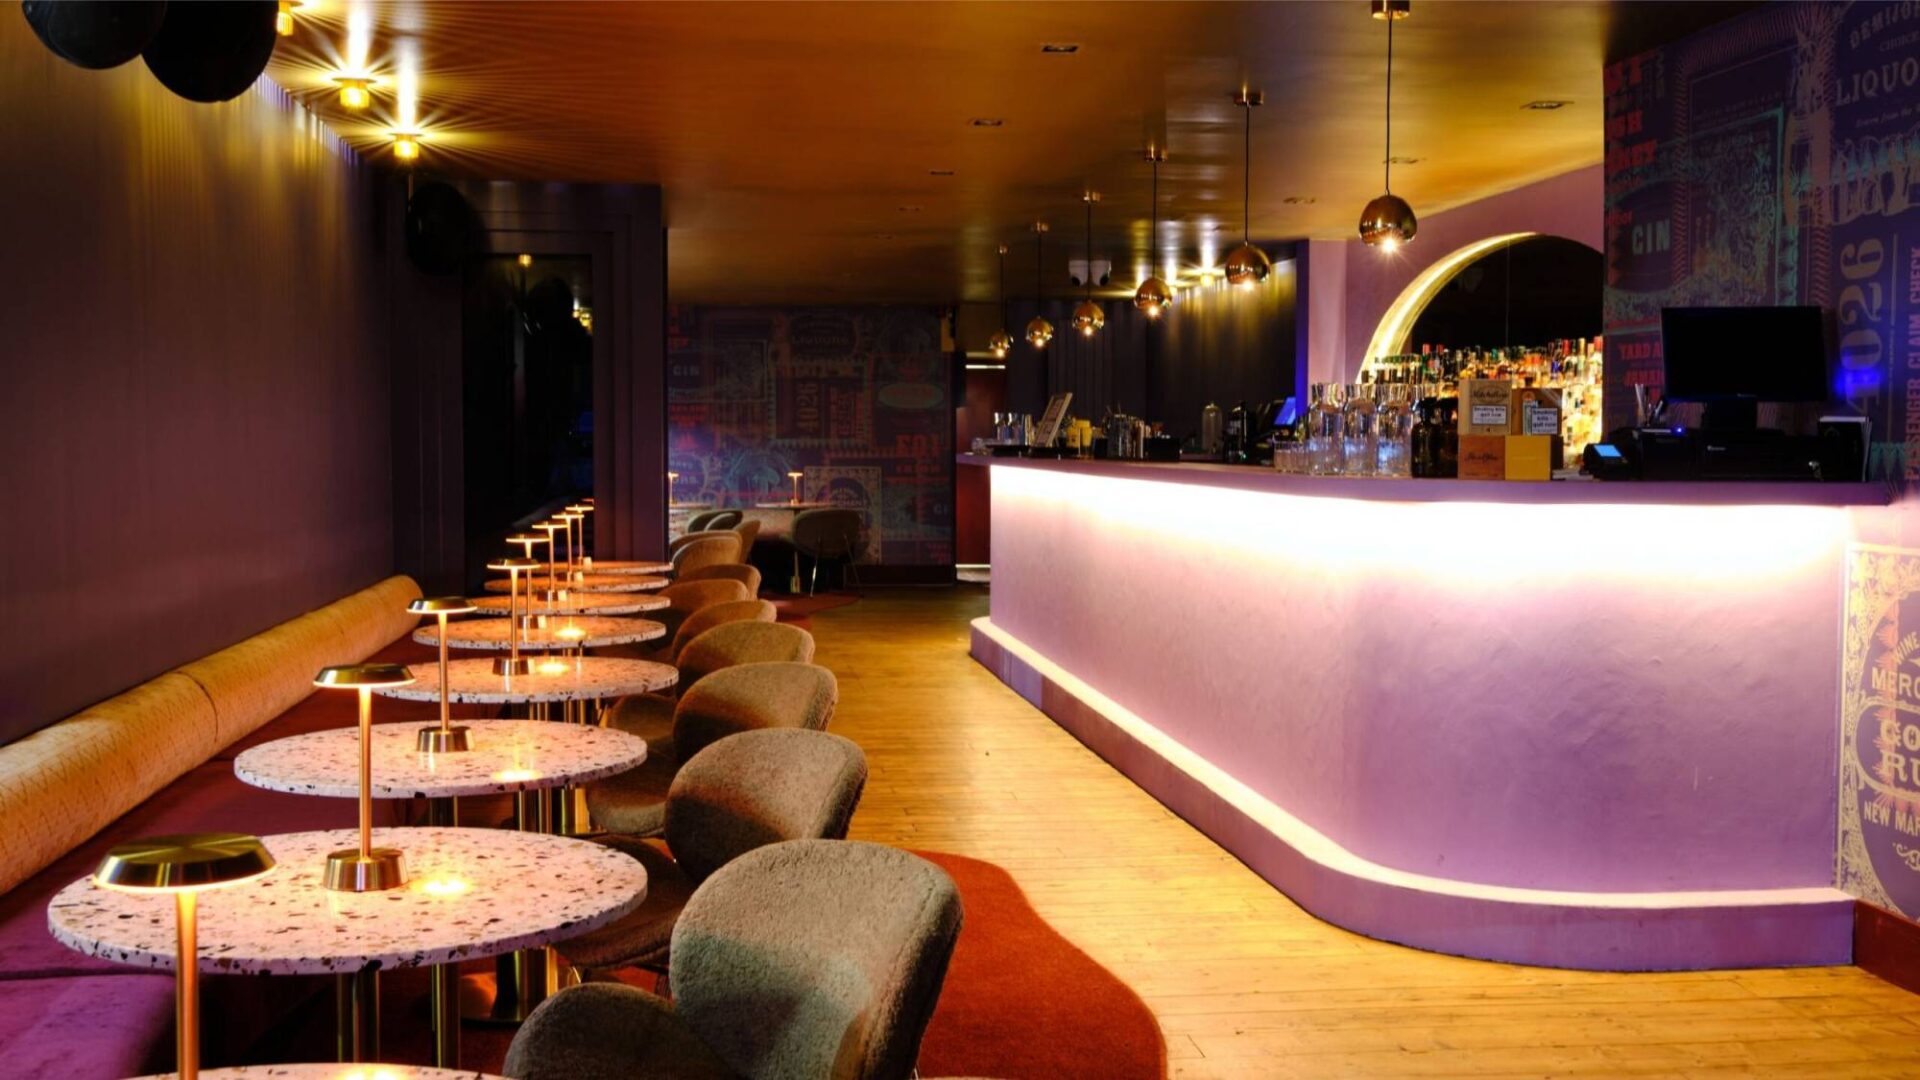 The Cocktail Mafia interior and bar